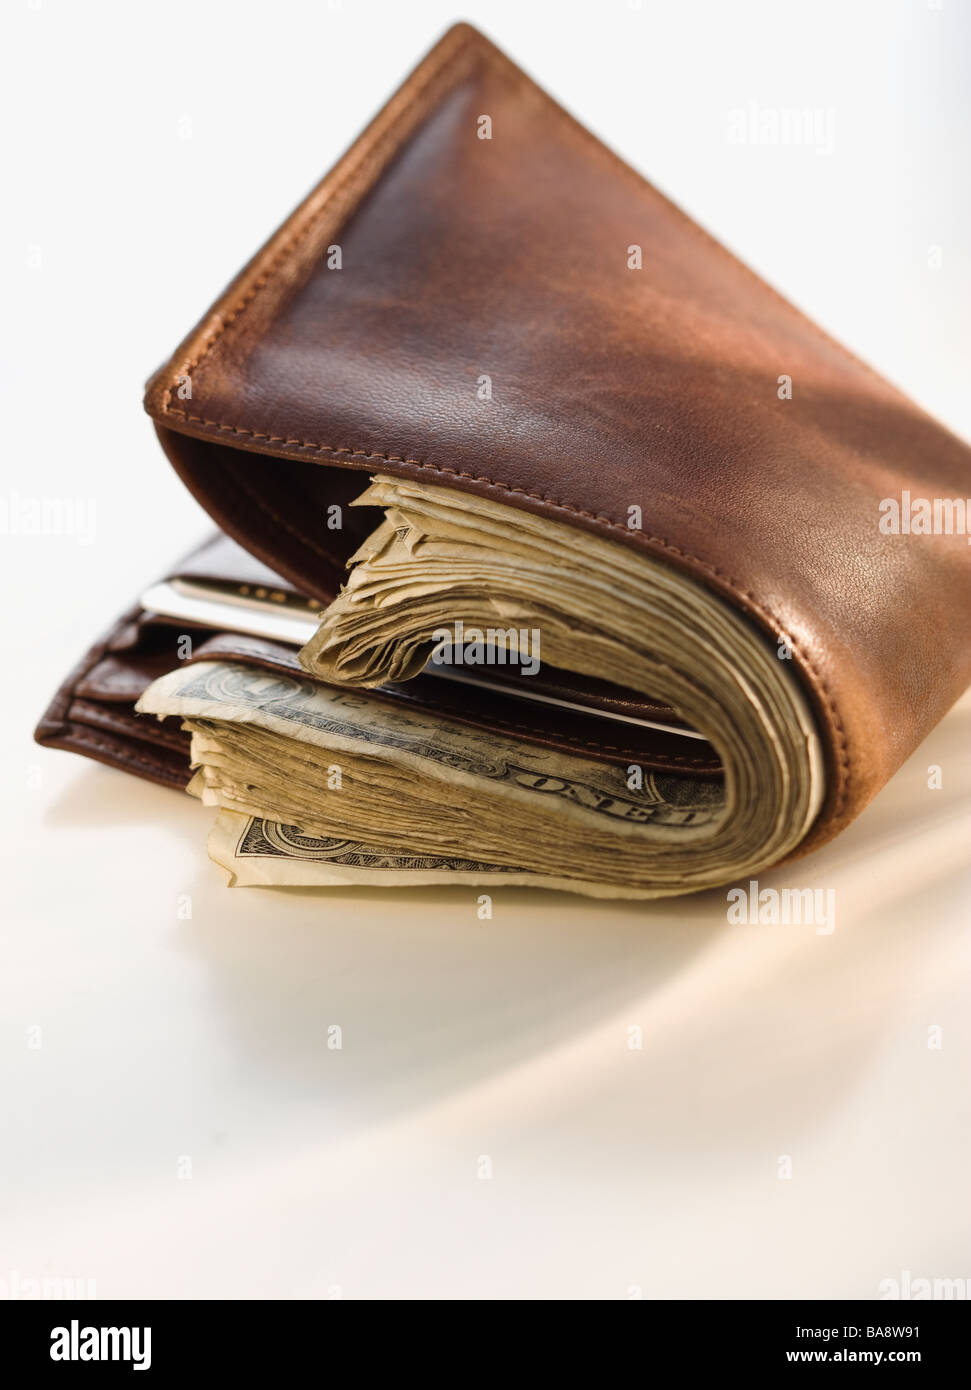 Overstuffed wallet Stock Photo